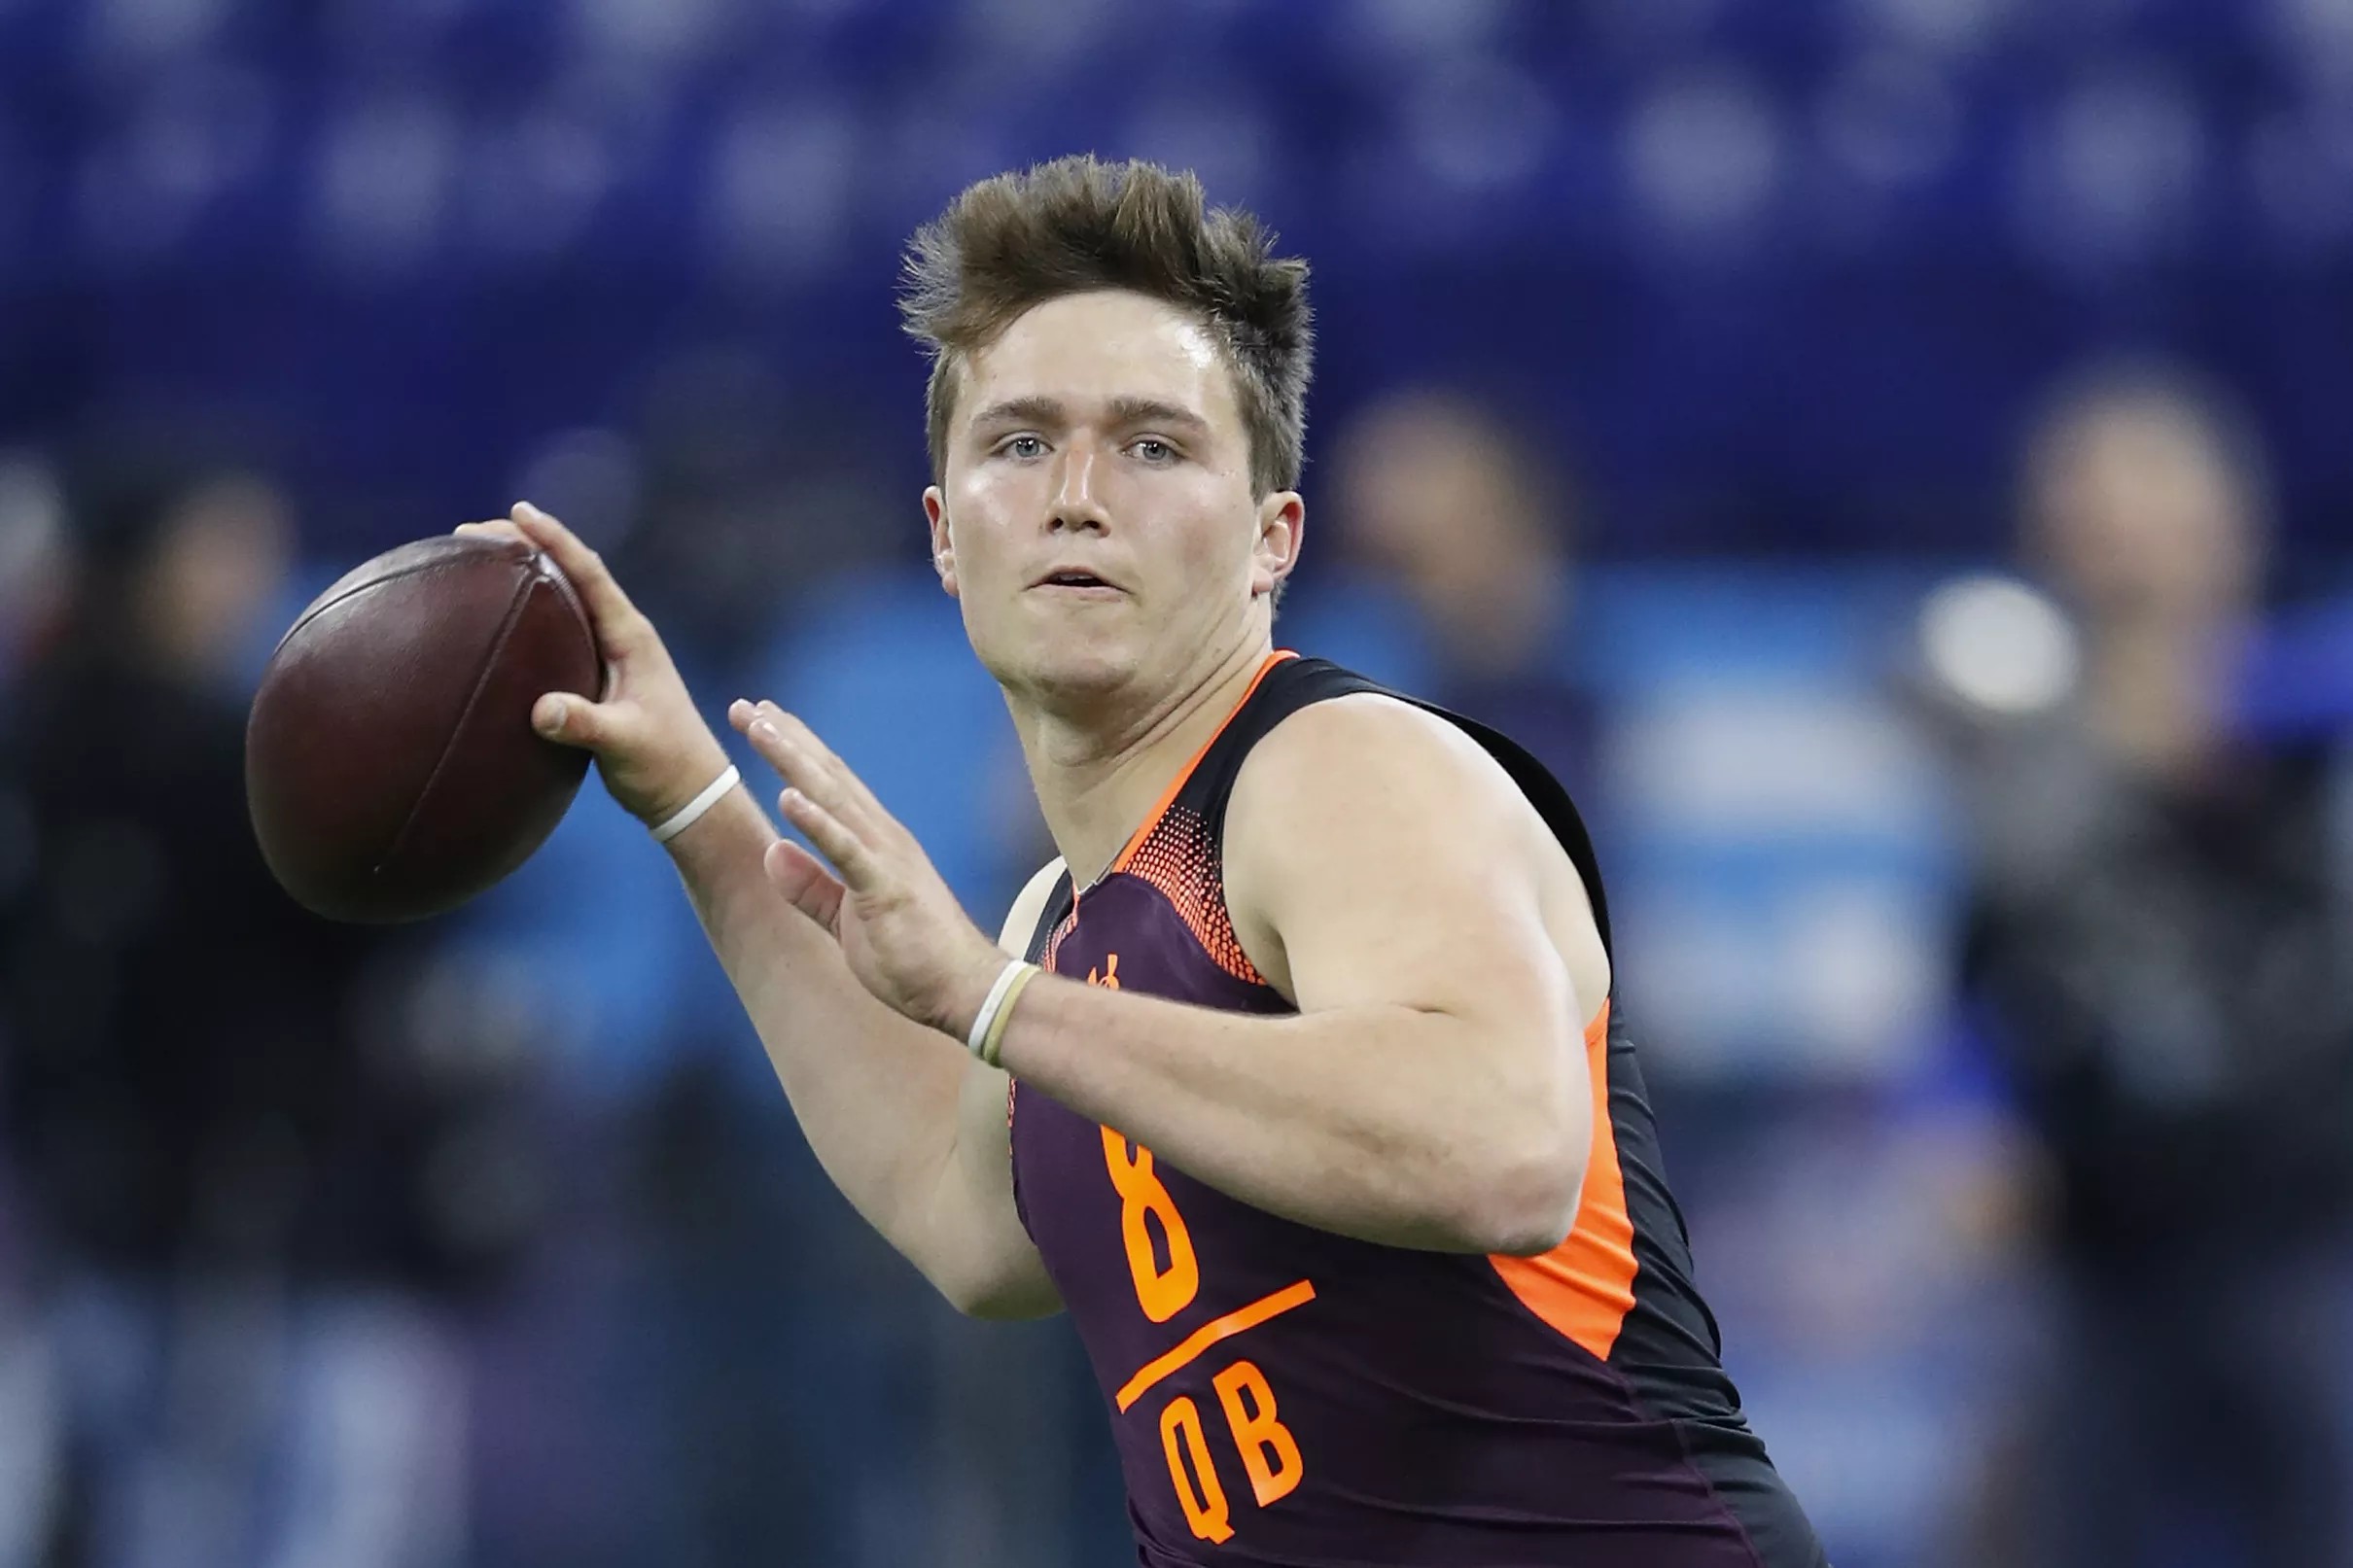 2019 NFL Mock Draft: Denver Broncos Select QB Drew Lock at No. 10